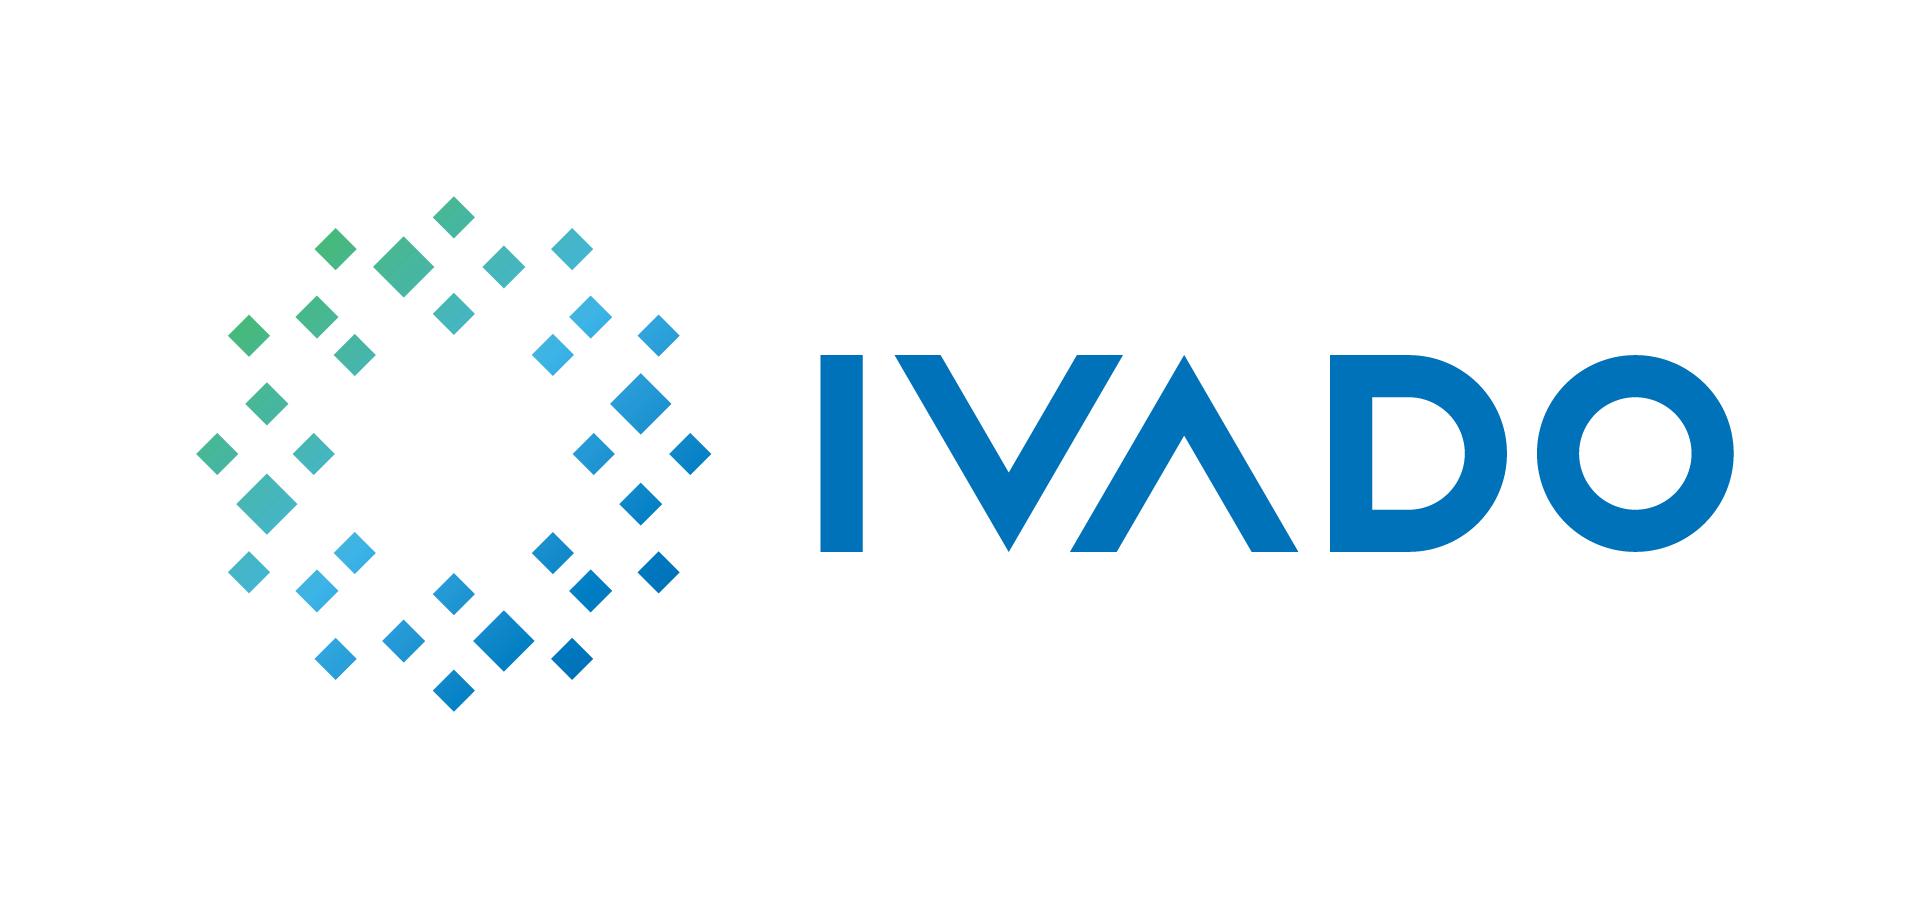 IVADO - financements / funding logo